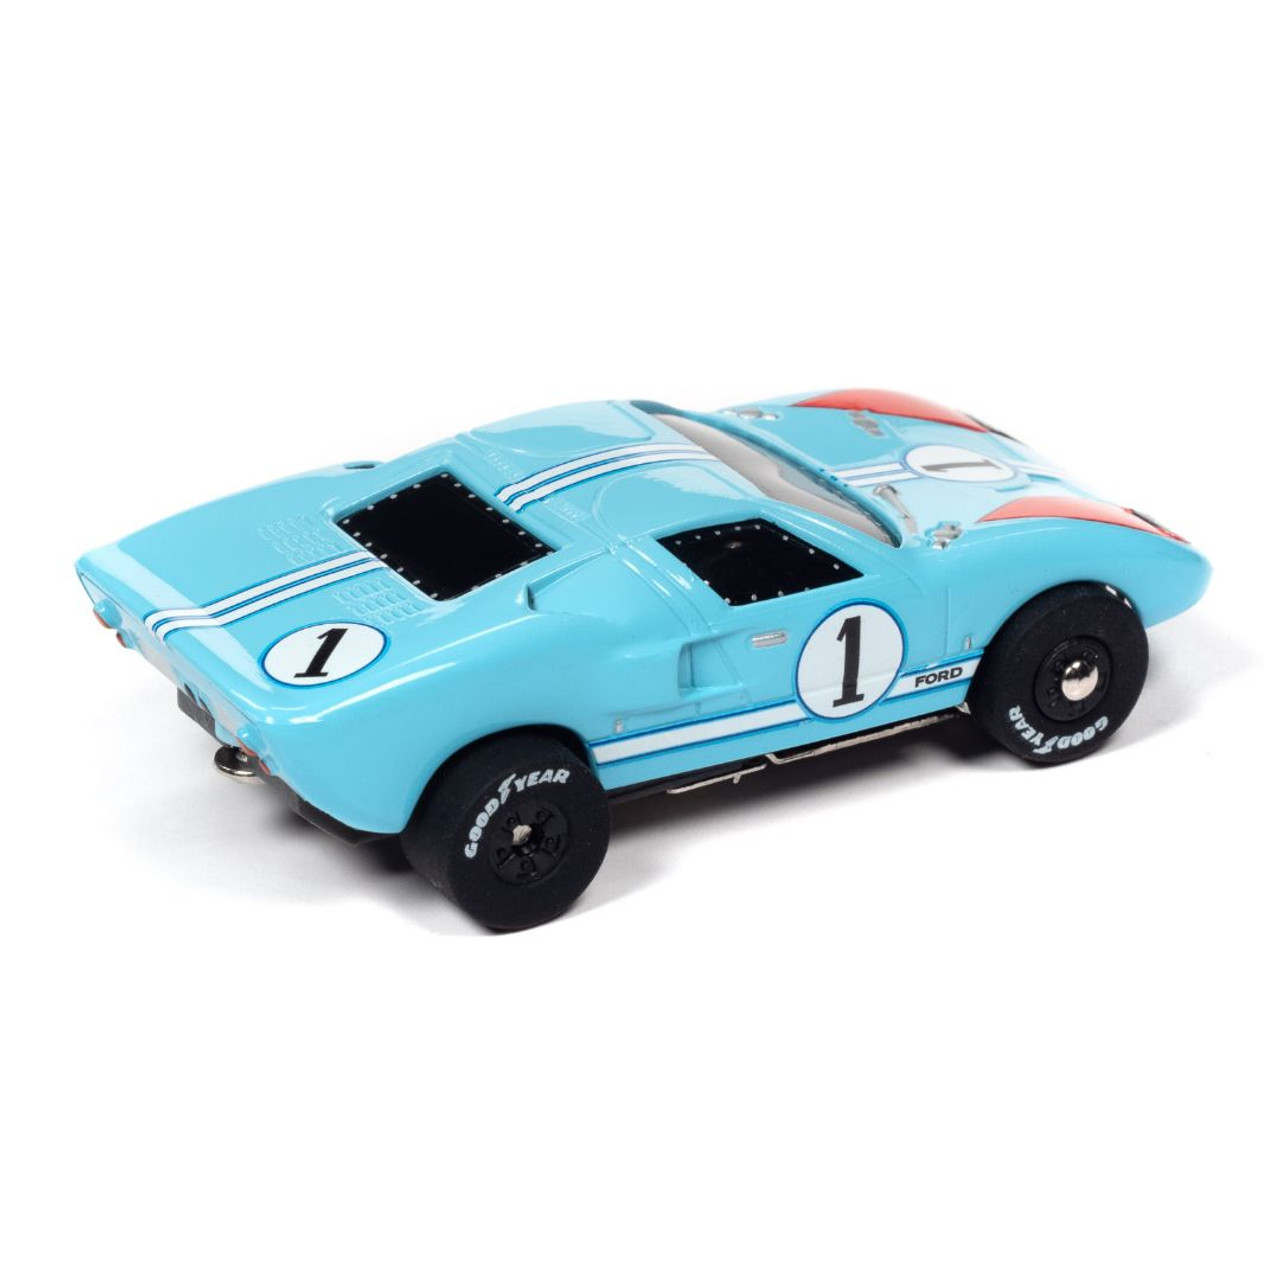 Miniature Ford GT - Hot Wheels x 24H Le Mans